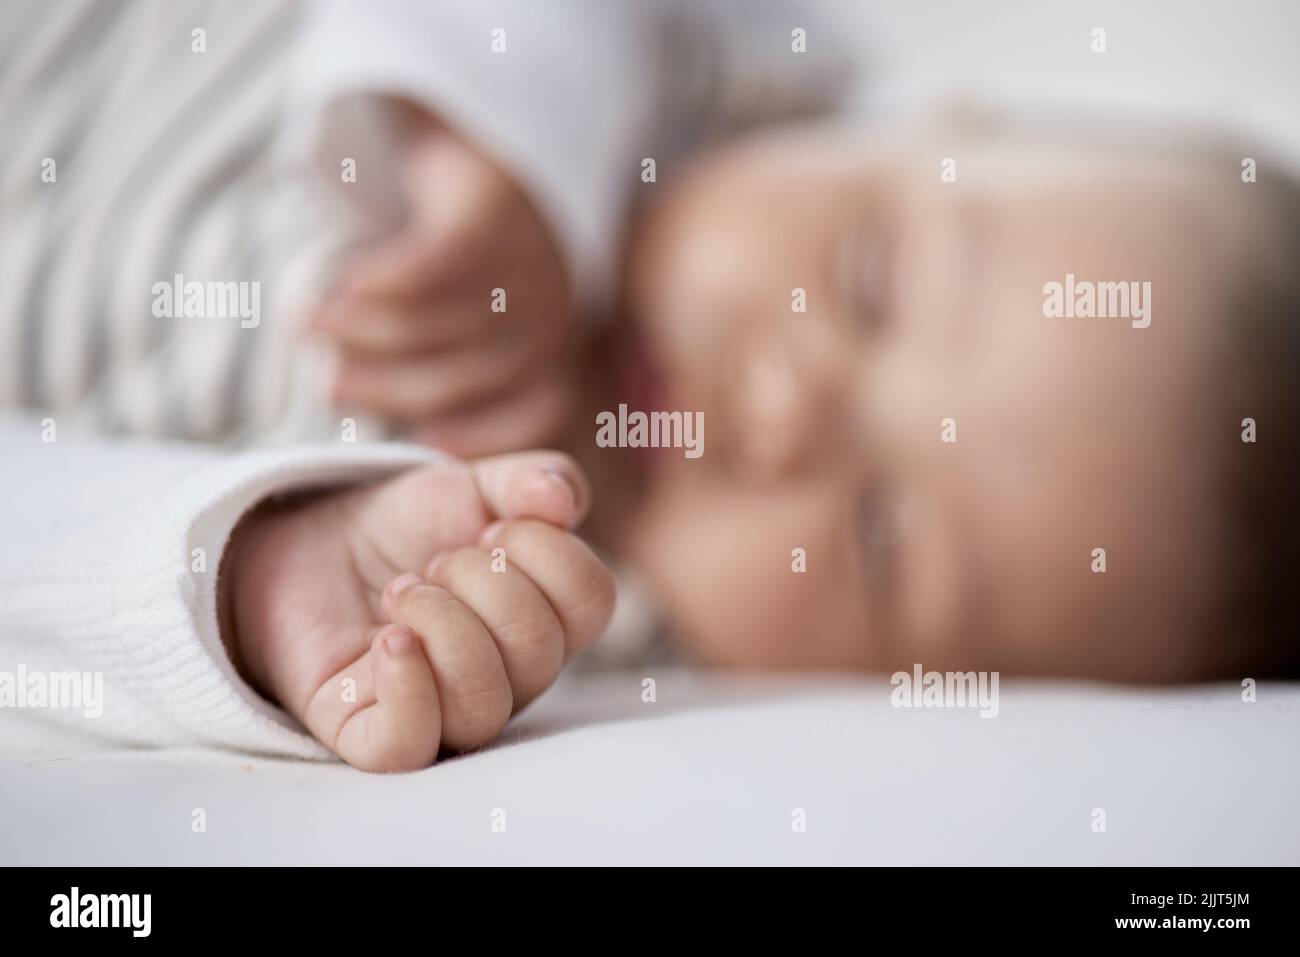 Babies need lots of sleep to grow. Closeup shot of a babys hand while asleep at home. Stock Photo